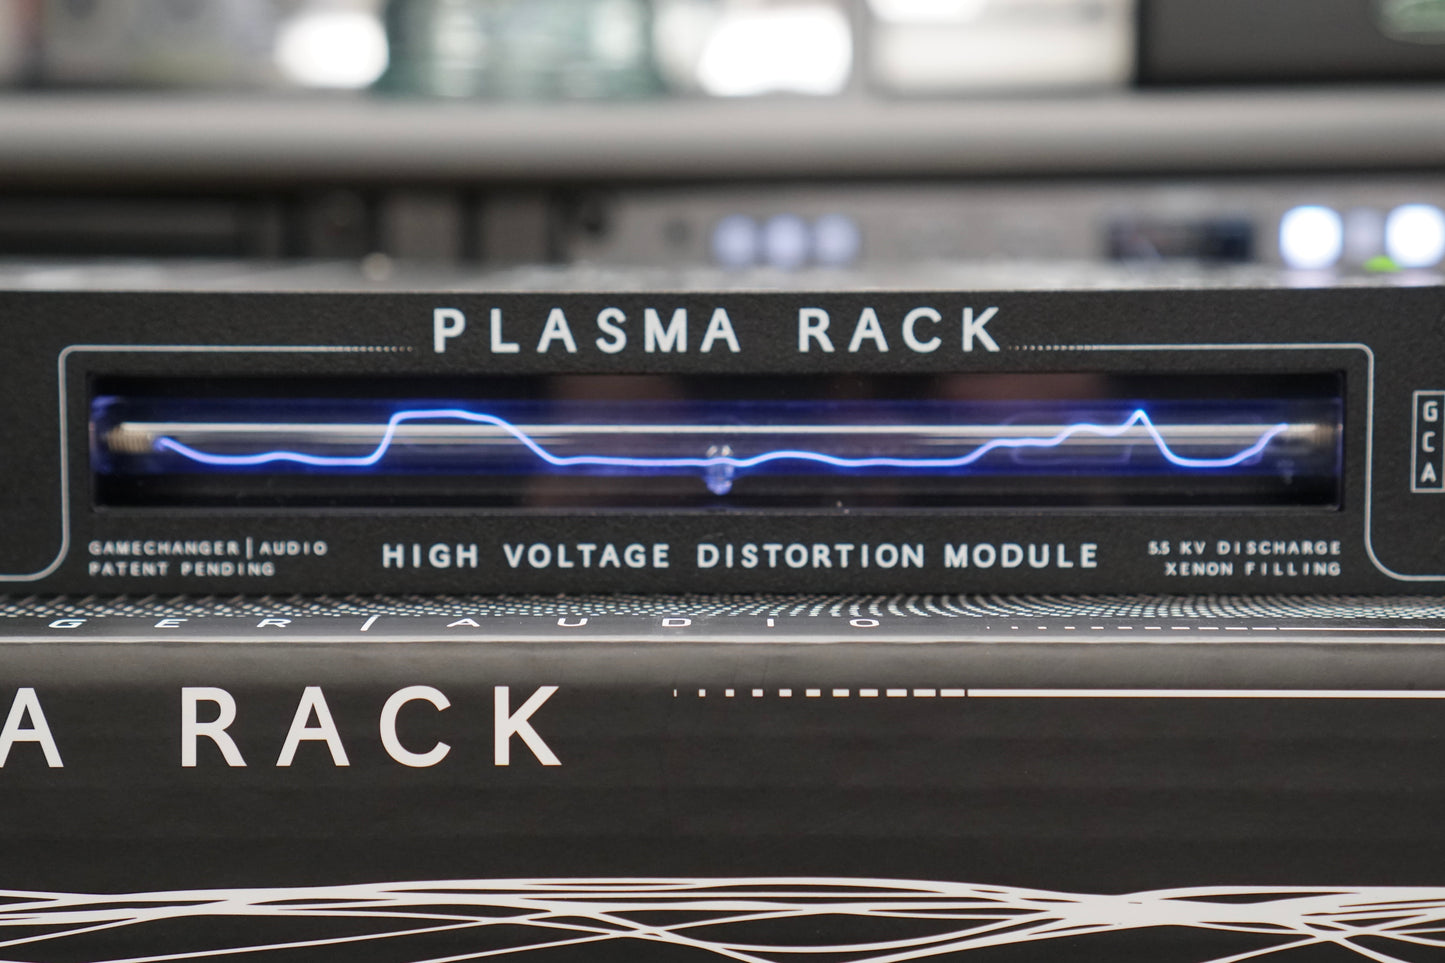 Gamechanger Audio Plasma Rack (New)